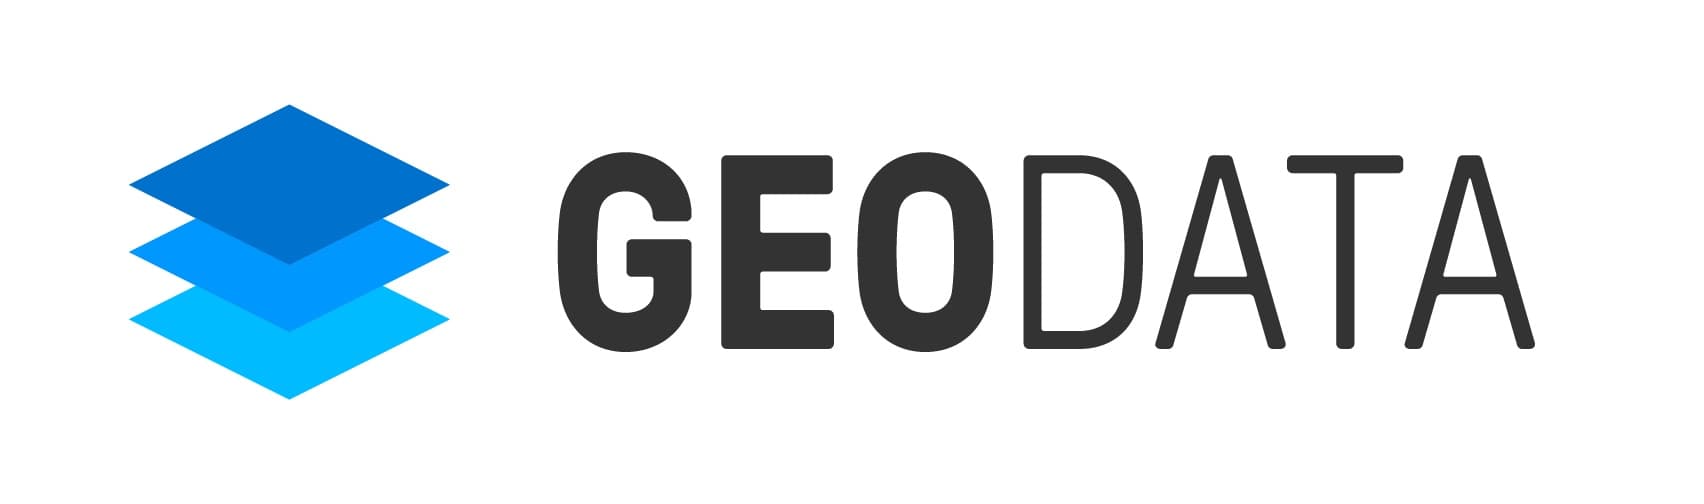 Geodata-logo